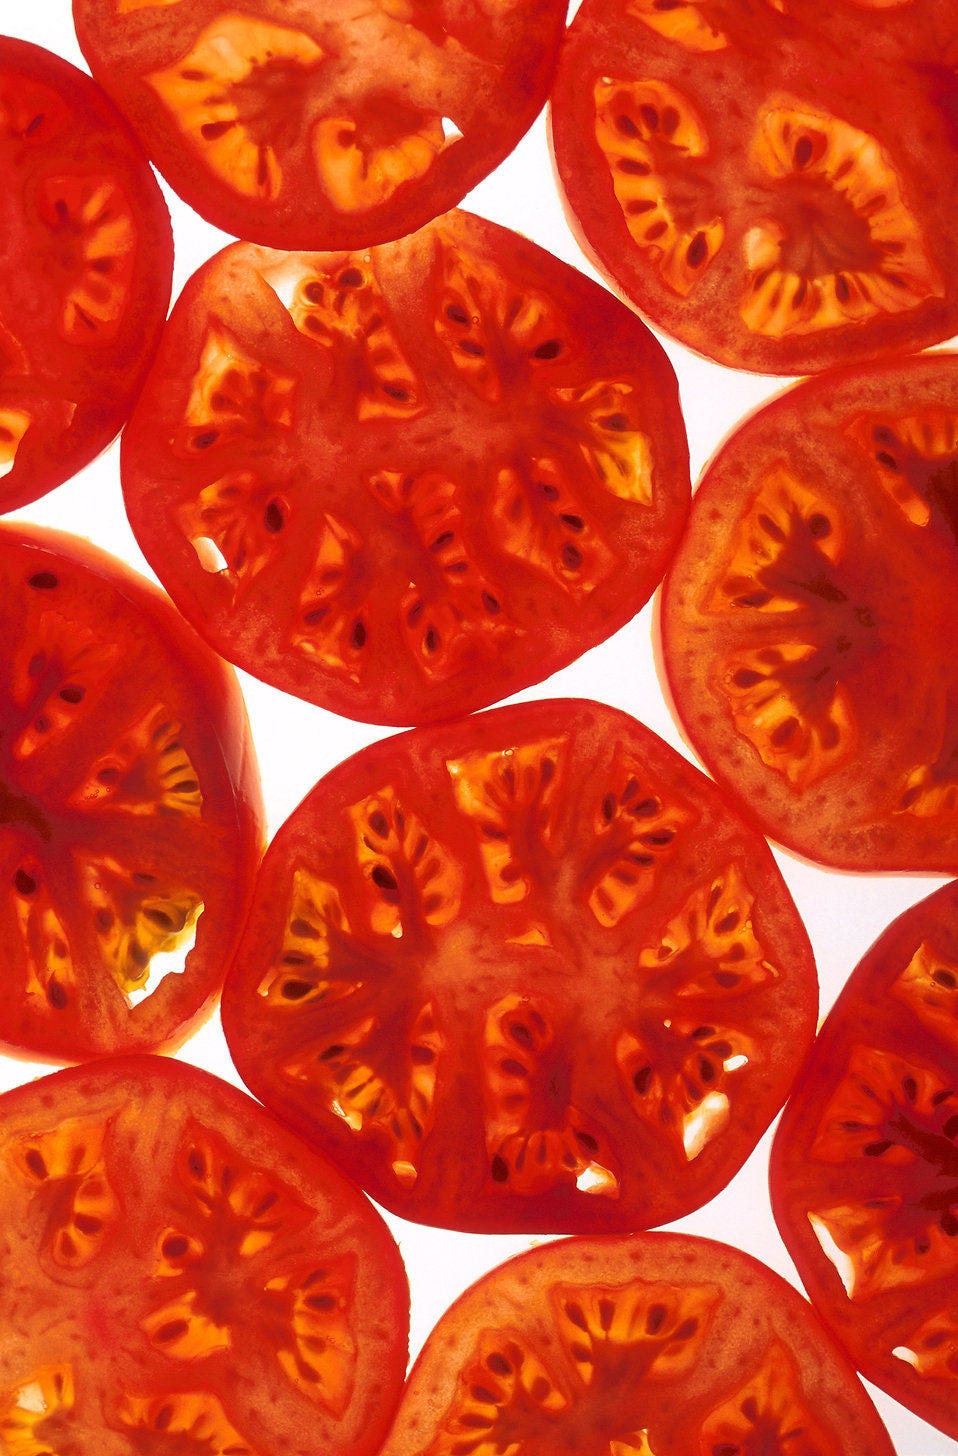 200 Red RUTGERS TOMATO Lycopersicon Globe Determinate 8 oz Fruit Vegetable Seeds